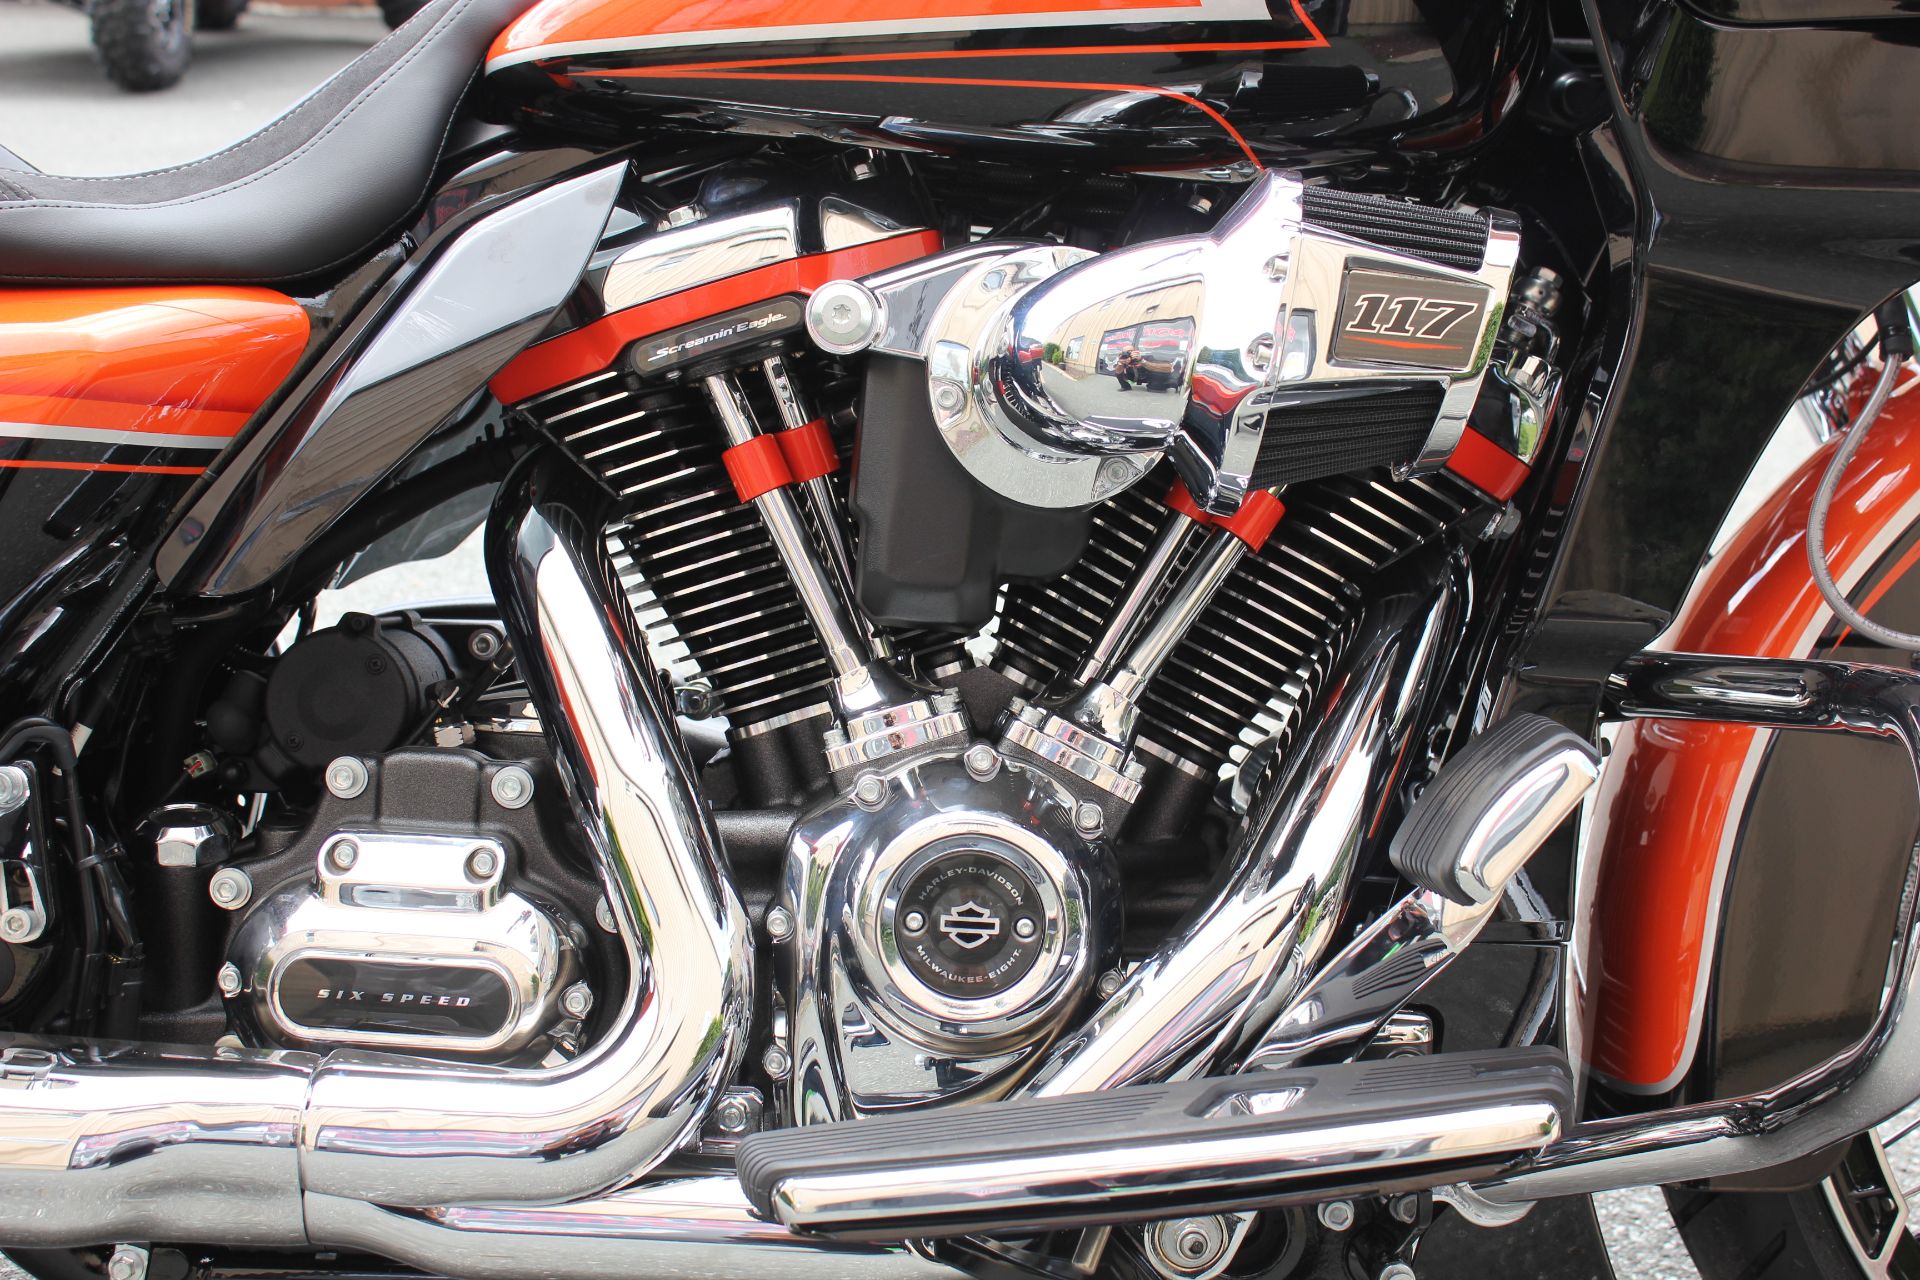 2022 Harley-Davidson ROAD GLIDE CVO in Pittsfield, Massachusetts - Photo 11